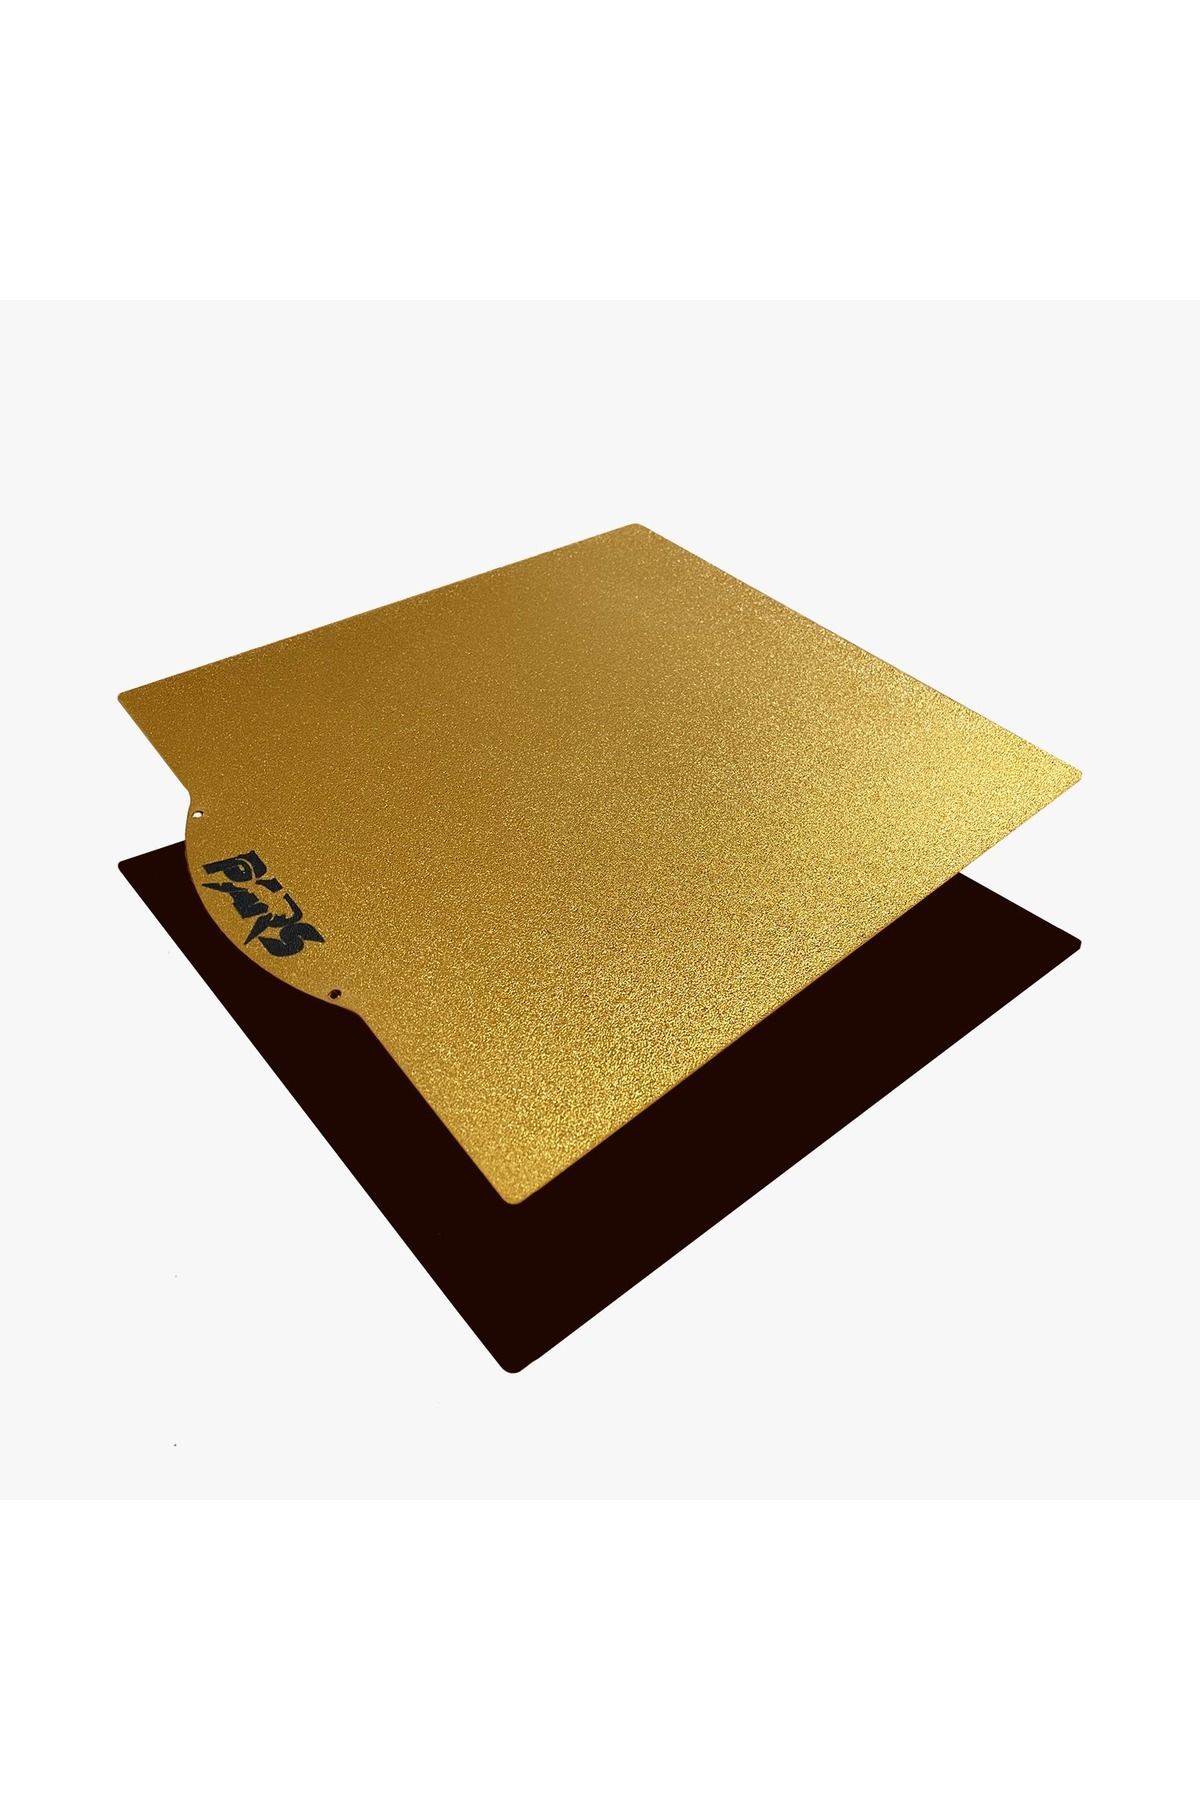 Pars 510x510 MM Pars Gold Pei Kaplı Özel Yay Çeliği Tabla Magnetli